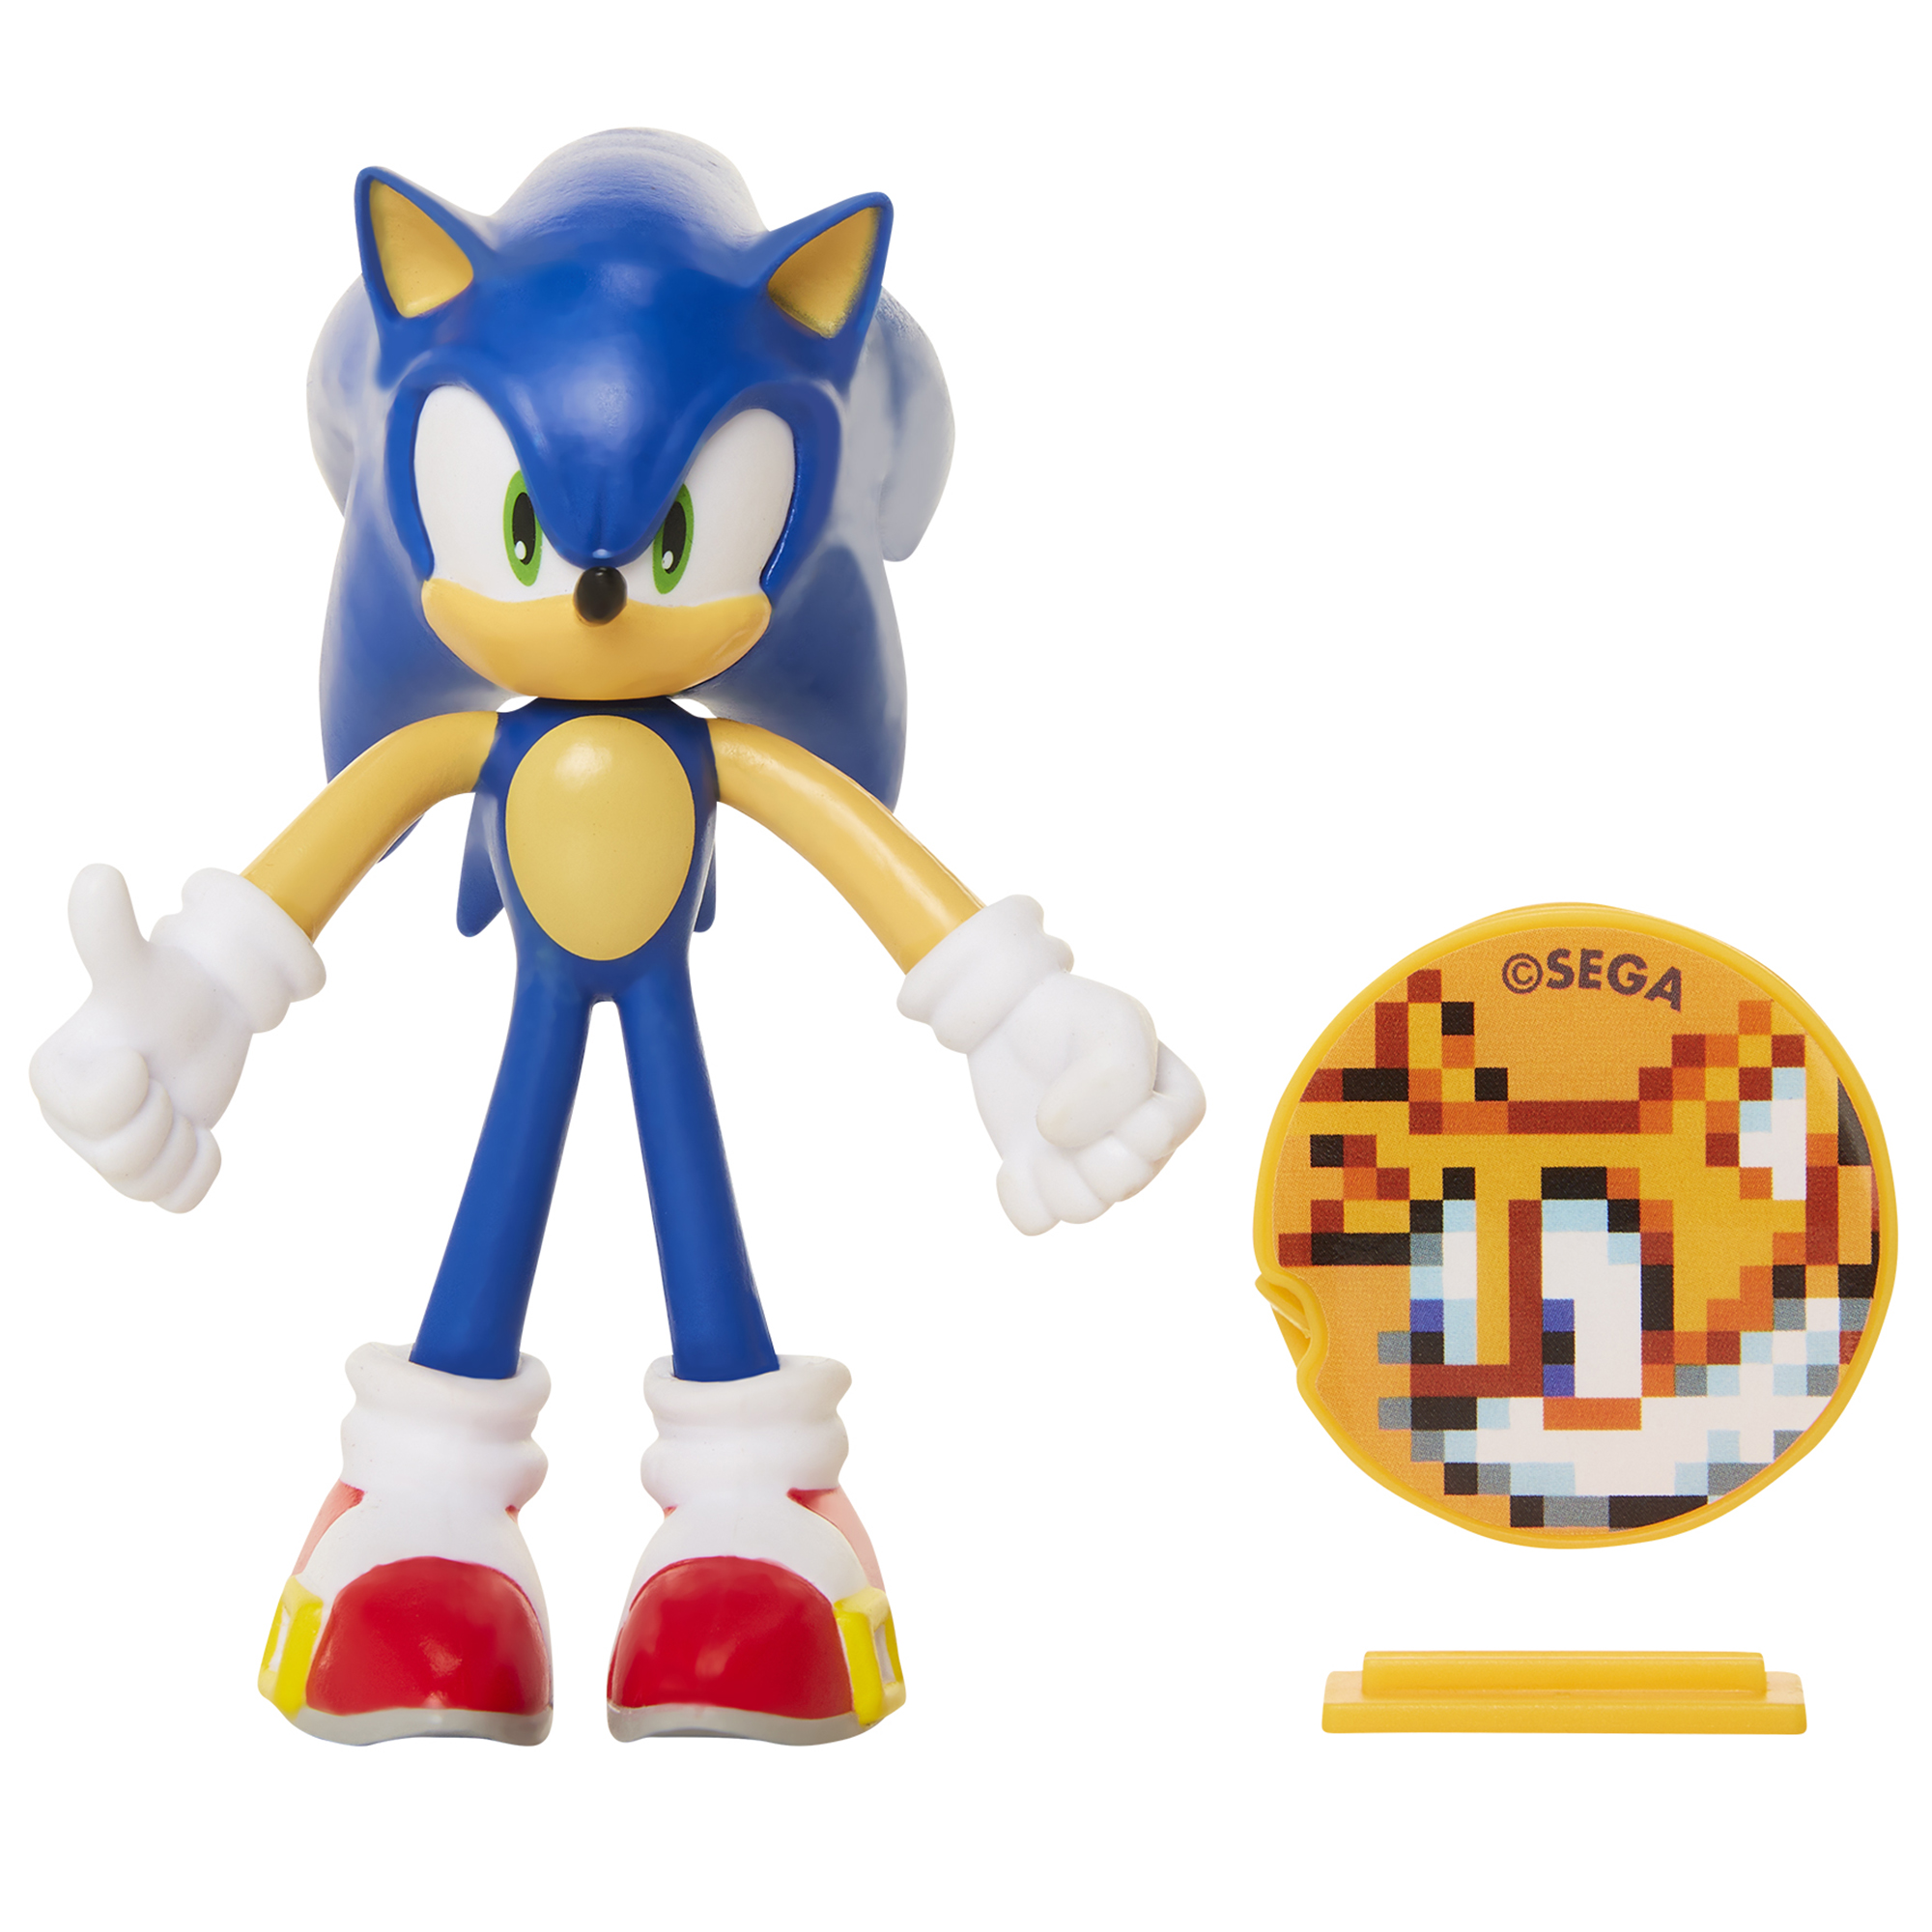 Sonic the Hedgehog 2 4 Wave 2 Set of 4 Figures, sonic sonic 2 